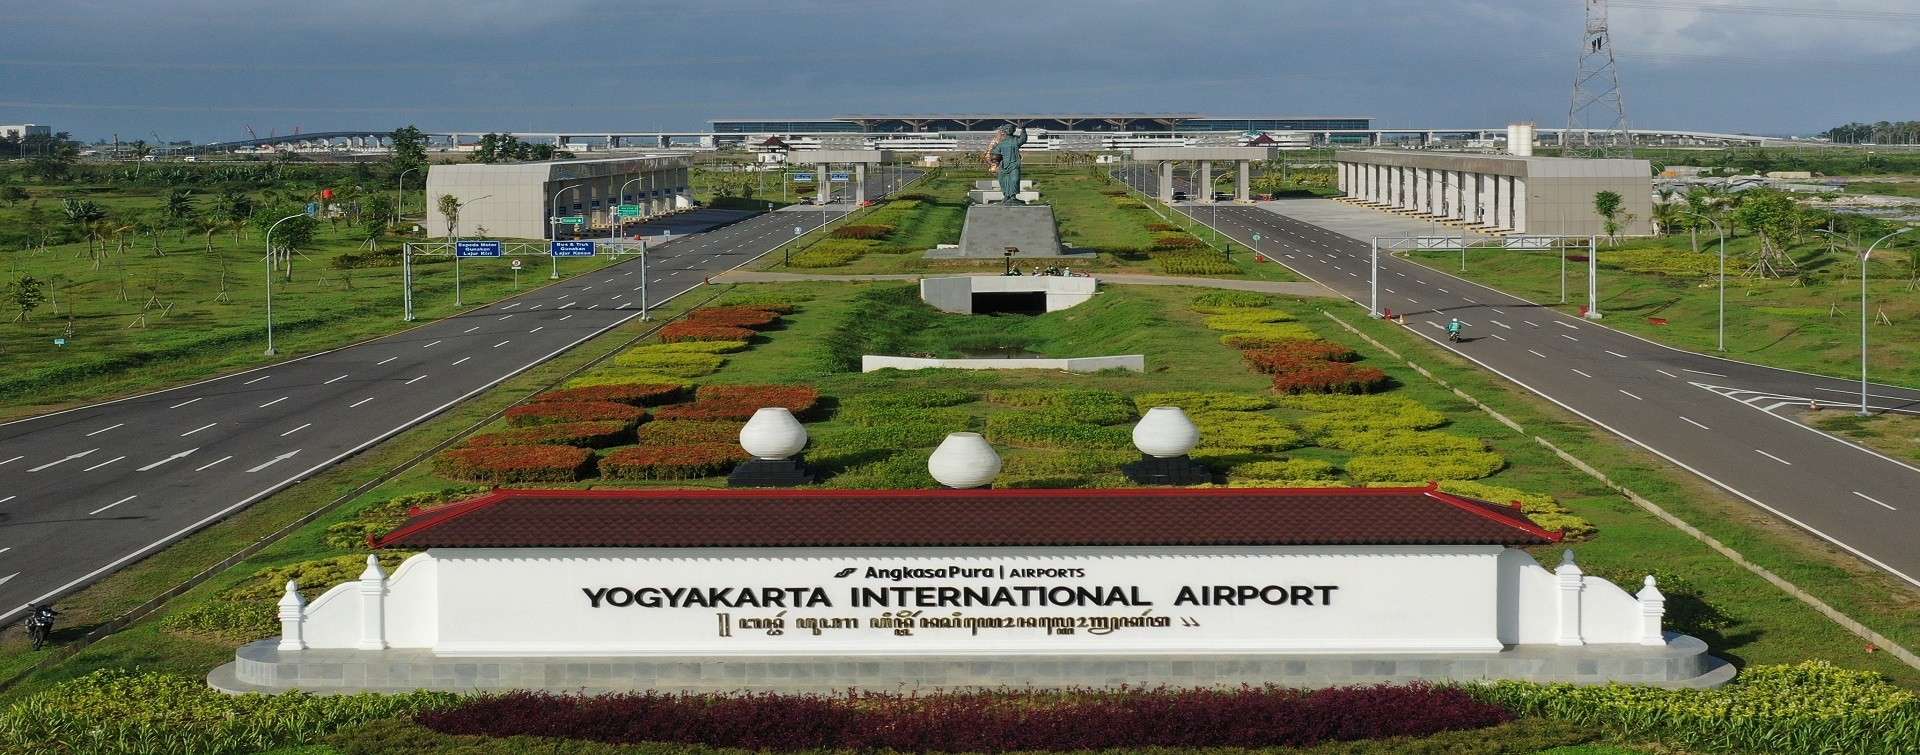 Yogyakarta International Airport | Kulon Progo